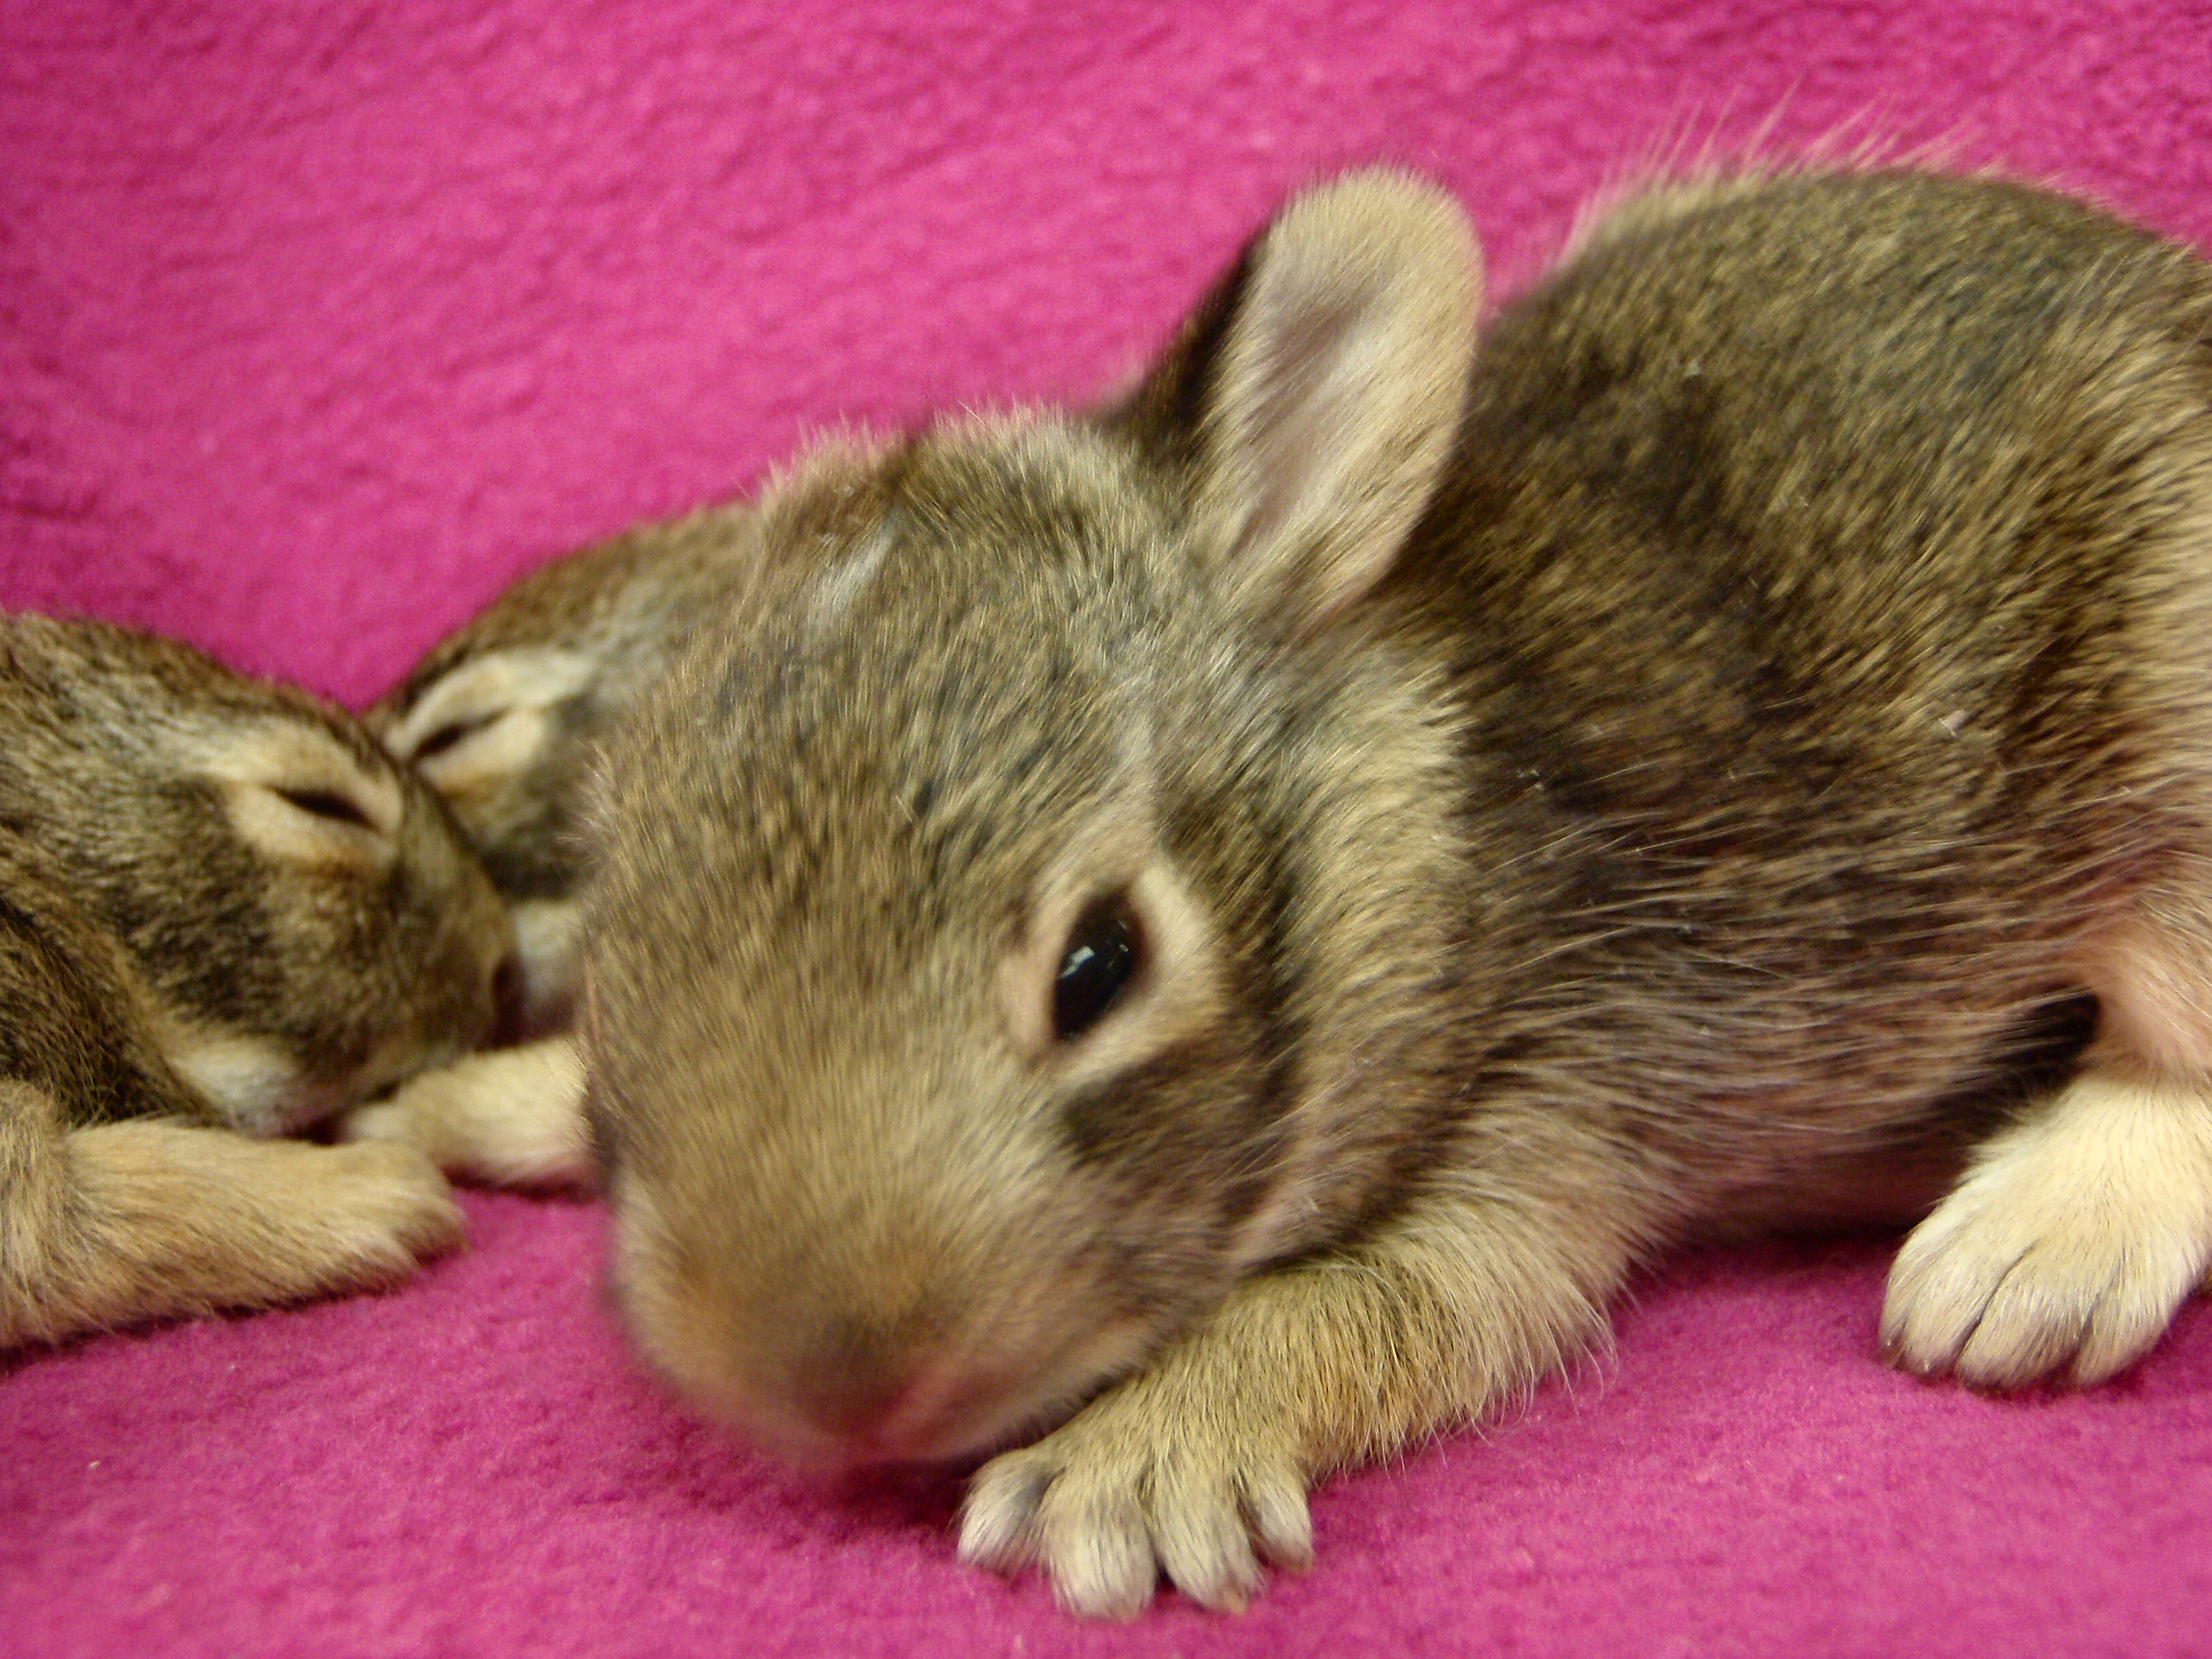 Baby Bunnies Best Left in Nest - Veterinary Medicine at Illinois